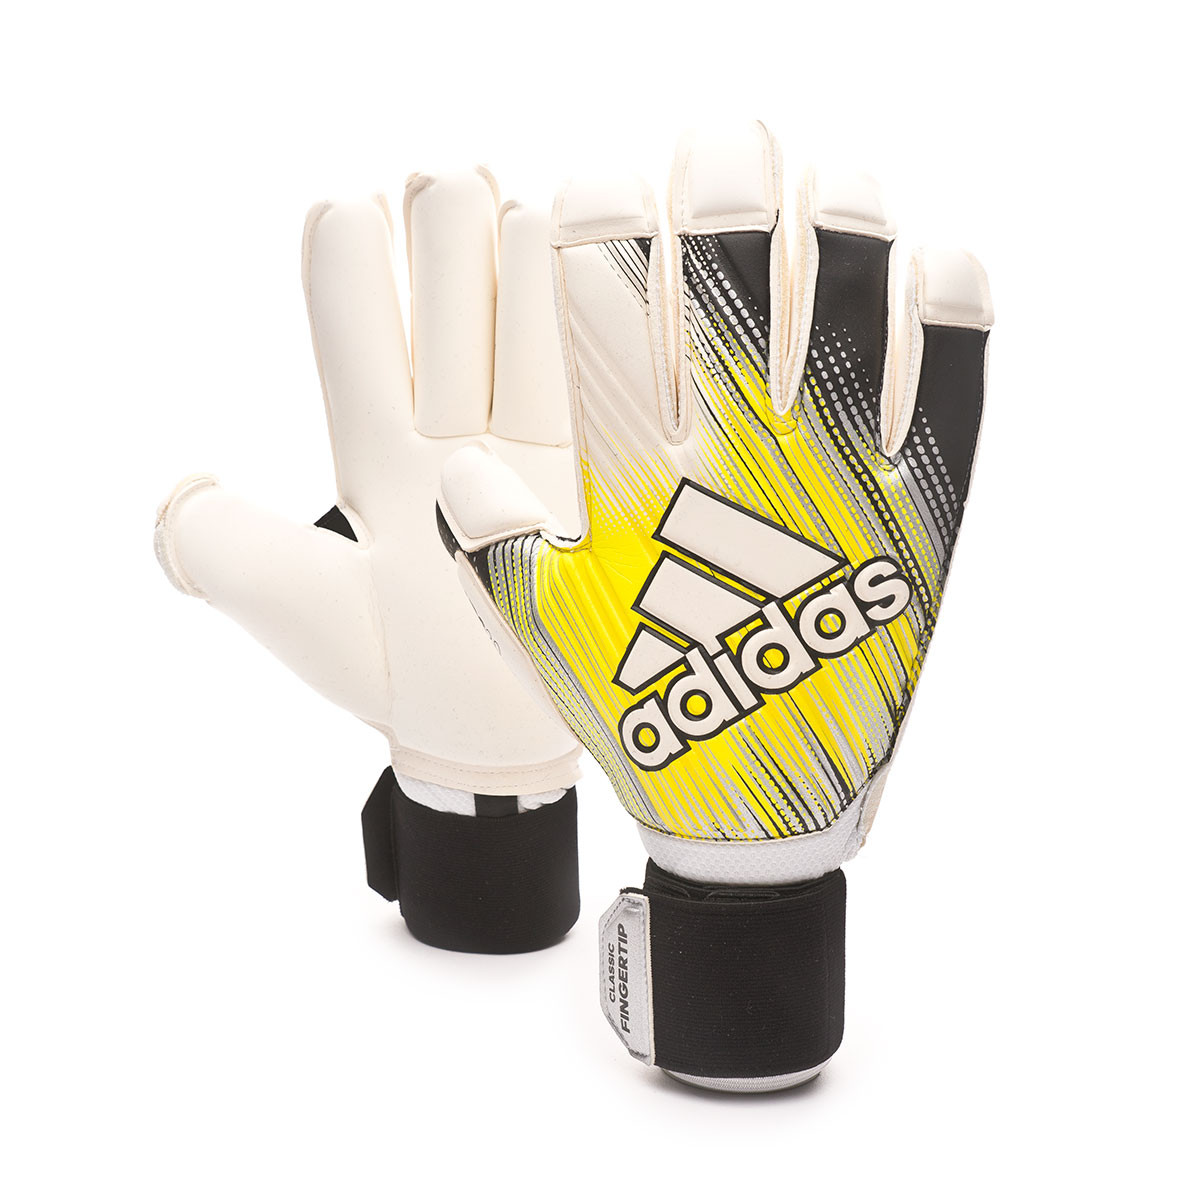 adidas goalkeeper gloves classic pro